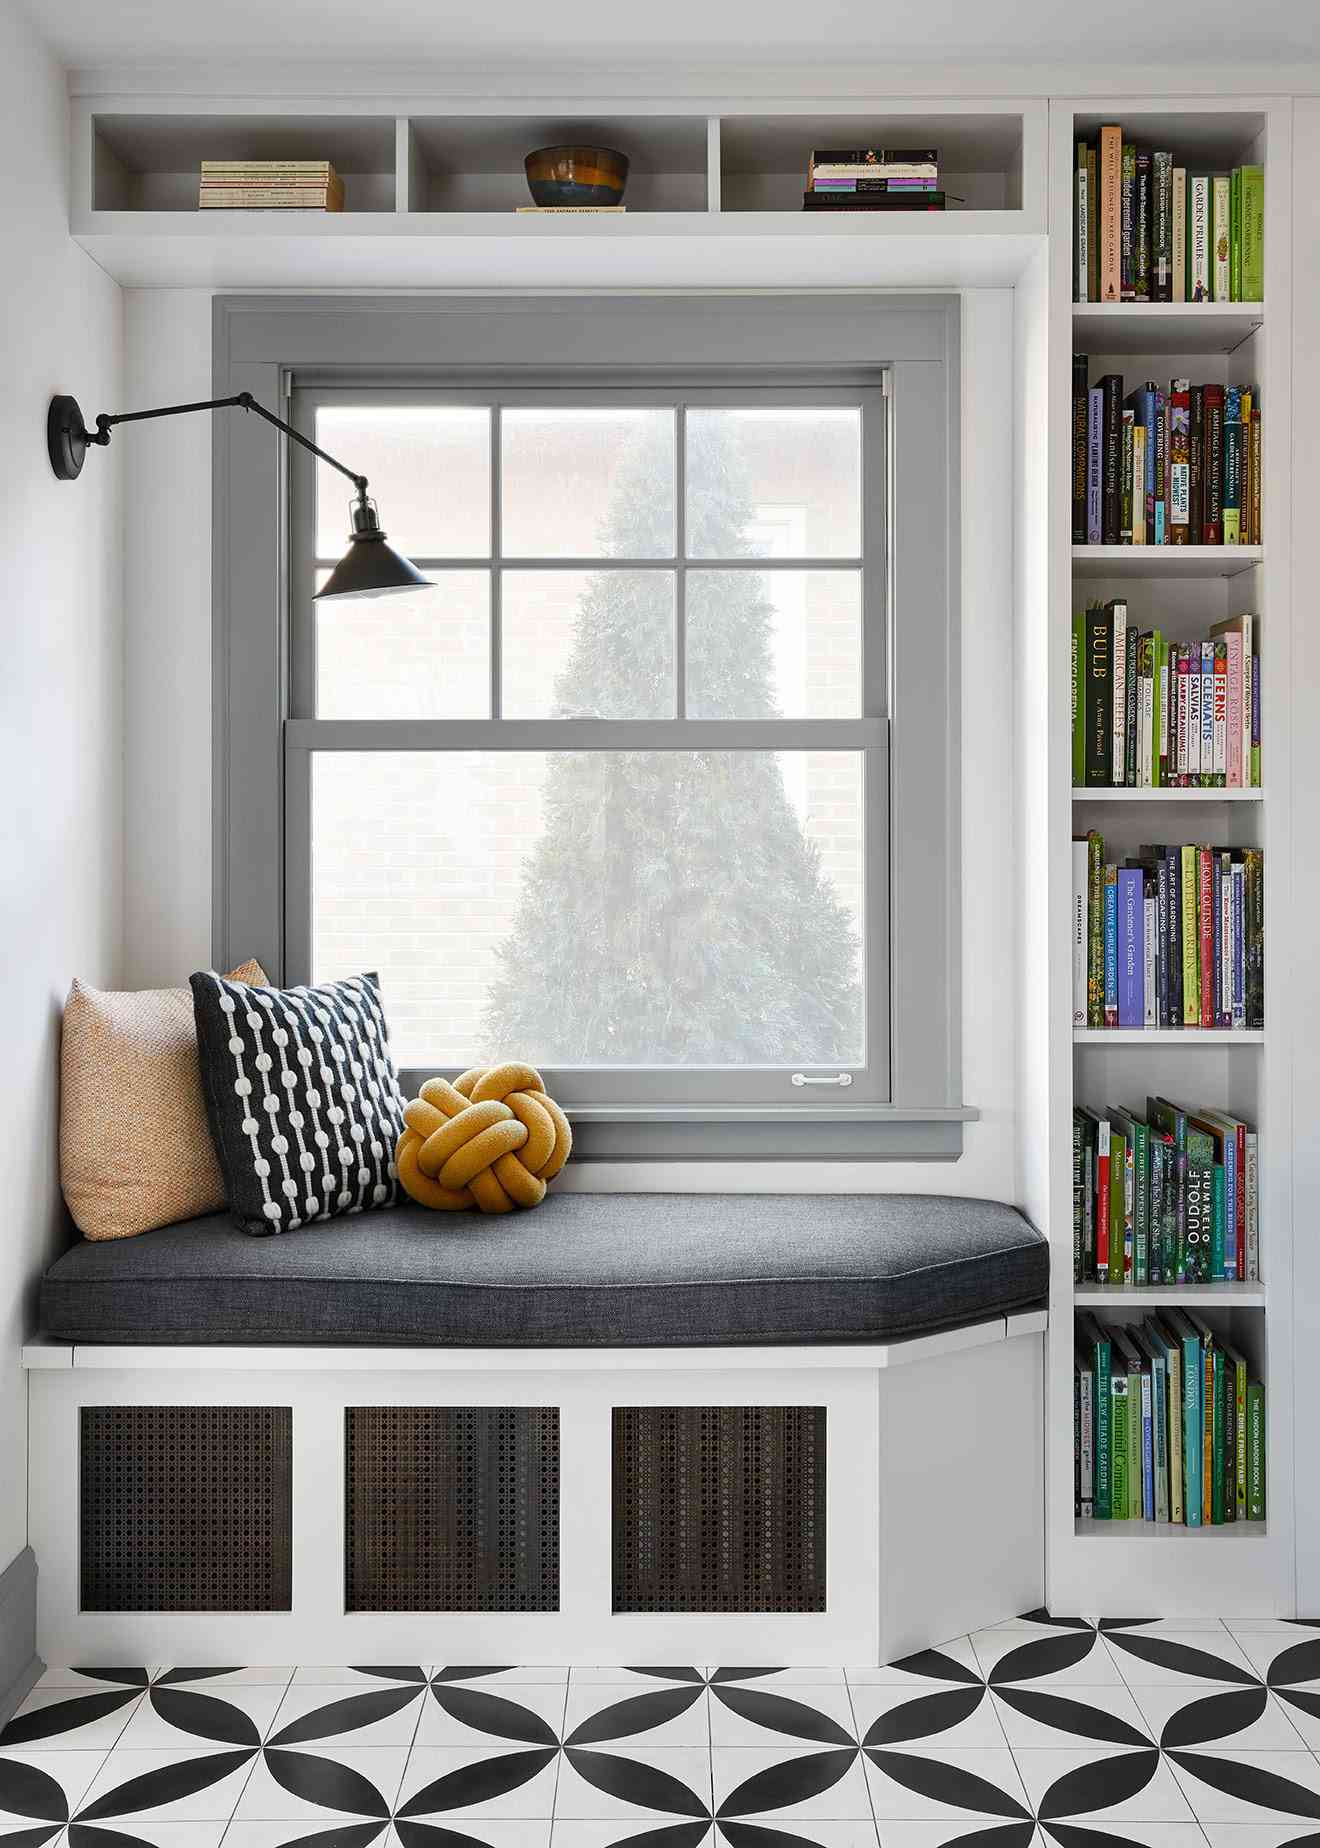 reading nook by kitchen window